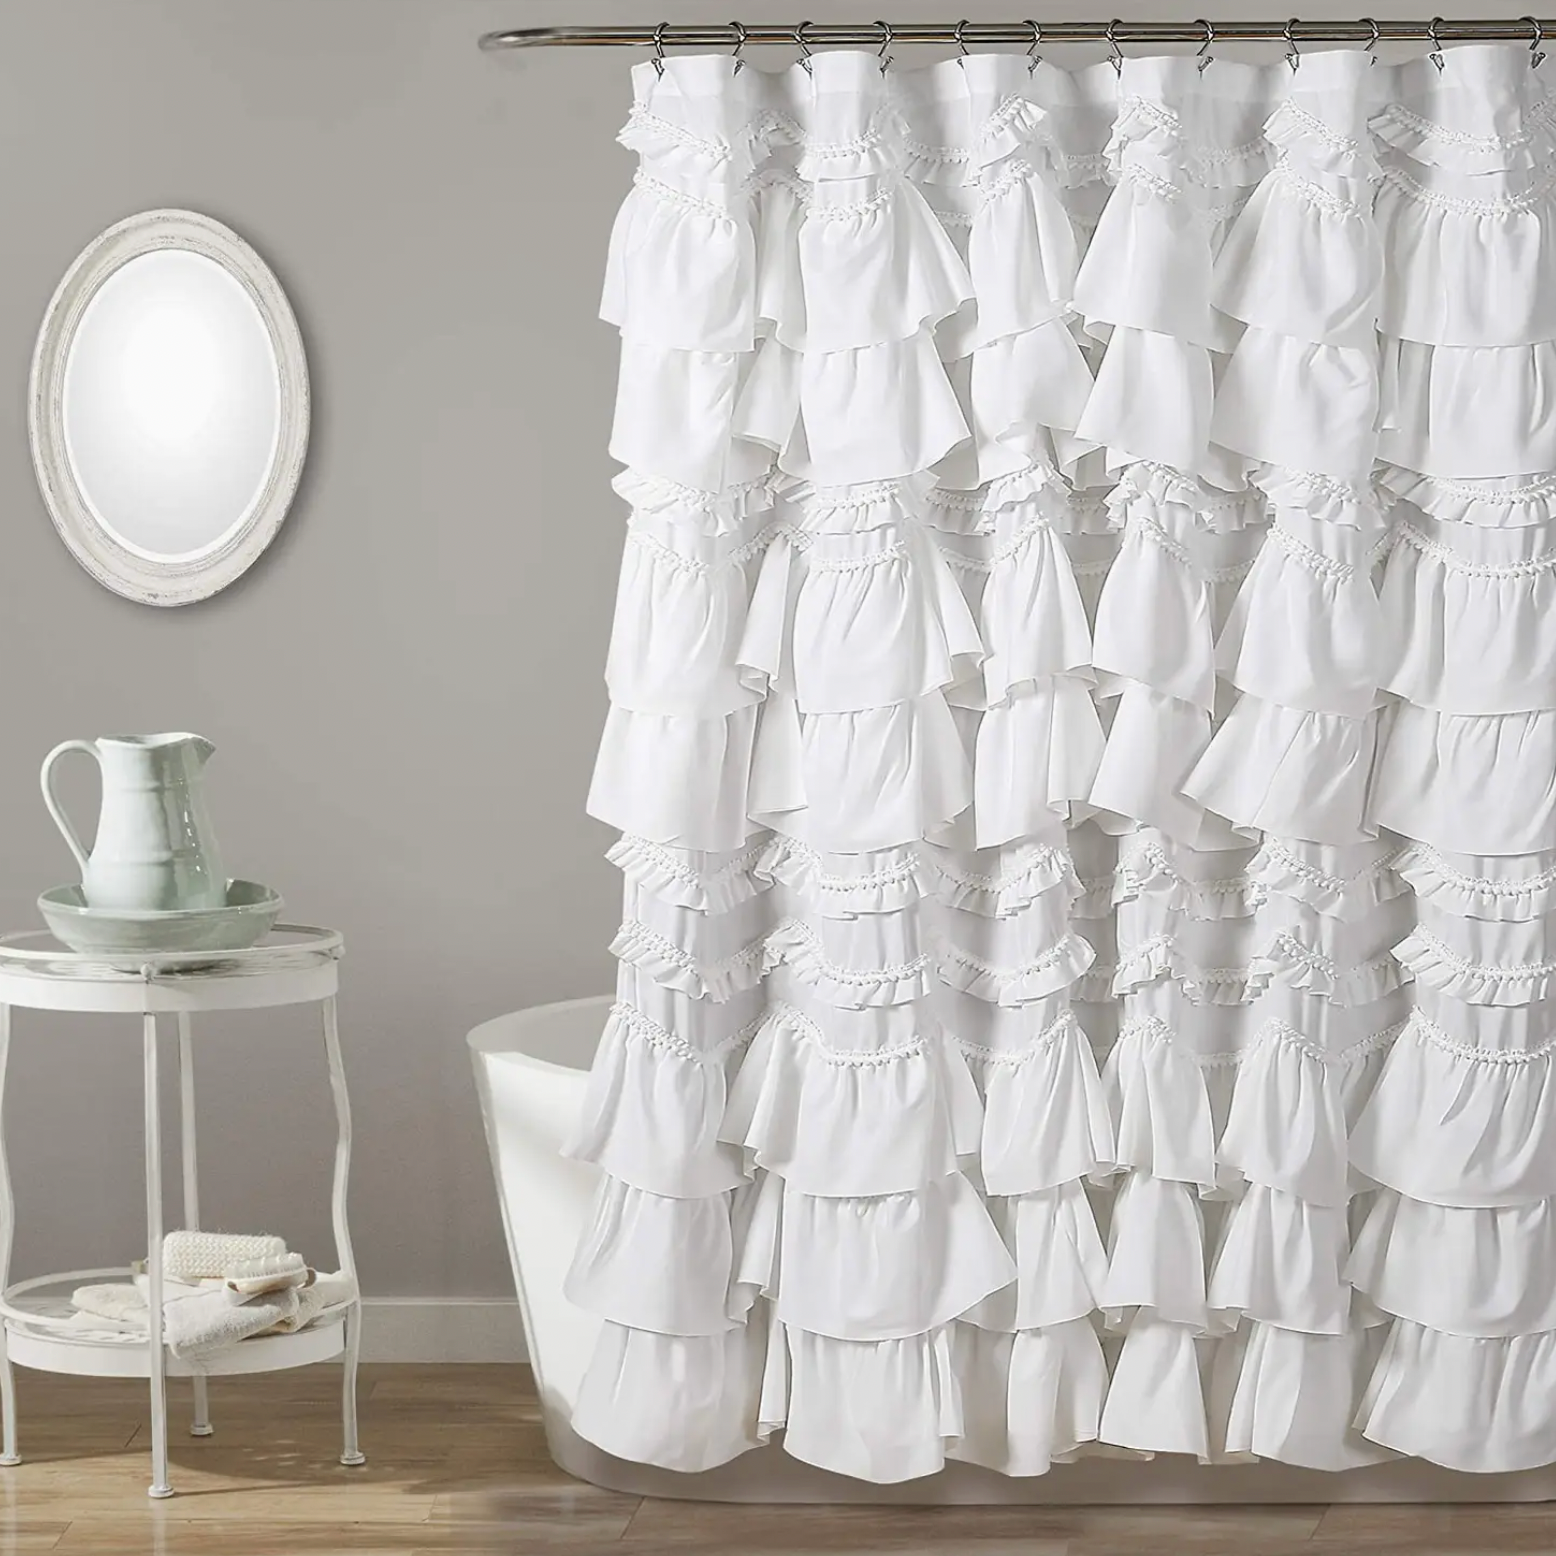 White French Layered Shower Curtain, 72" X 72" - Chic by Taj